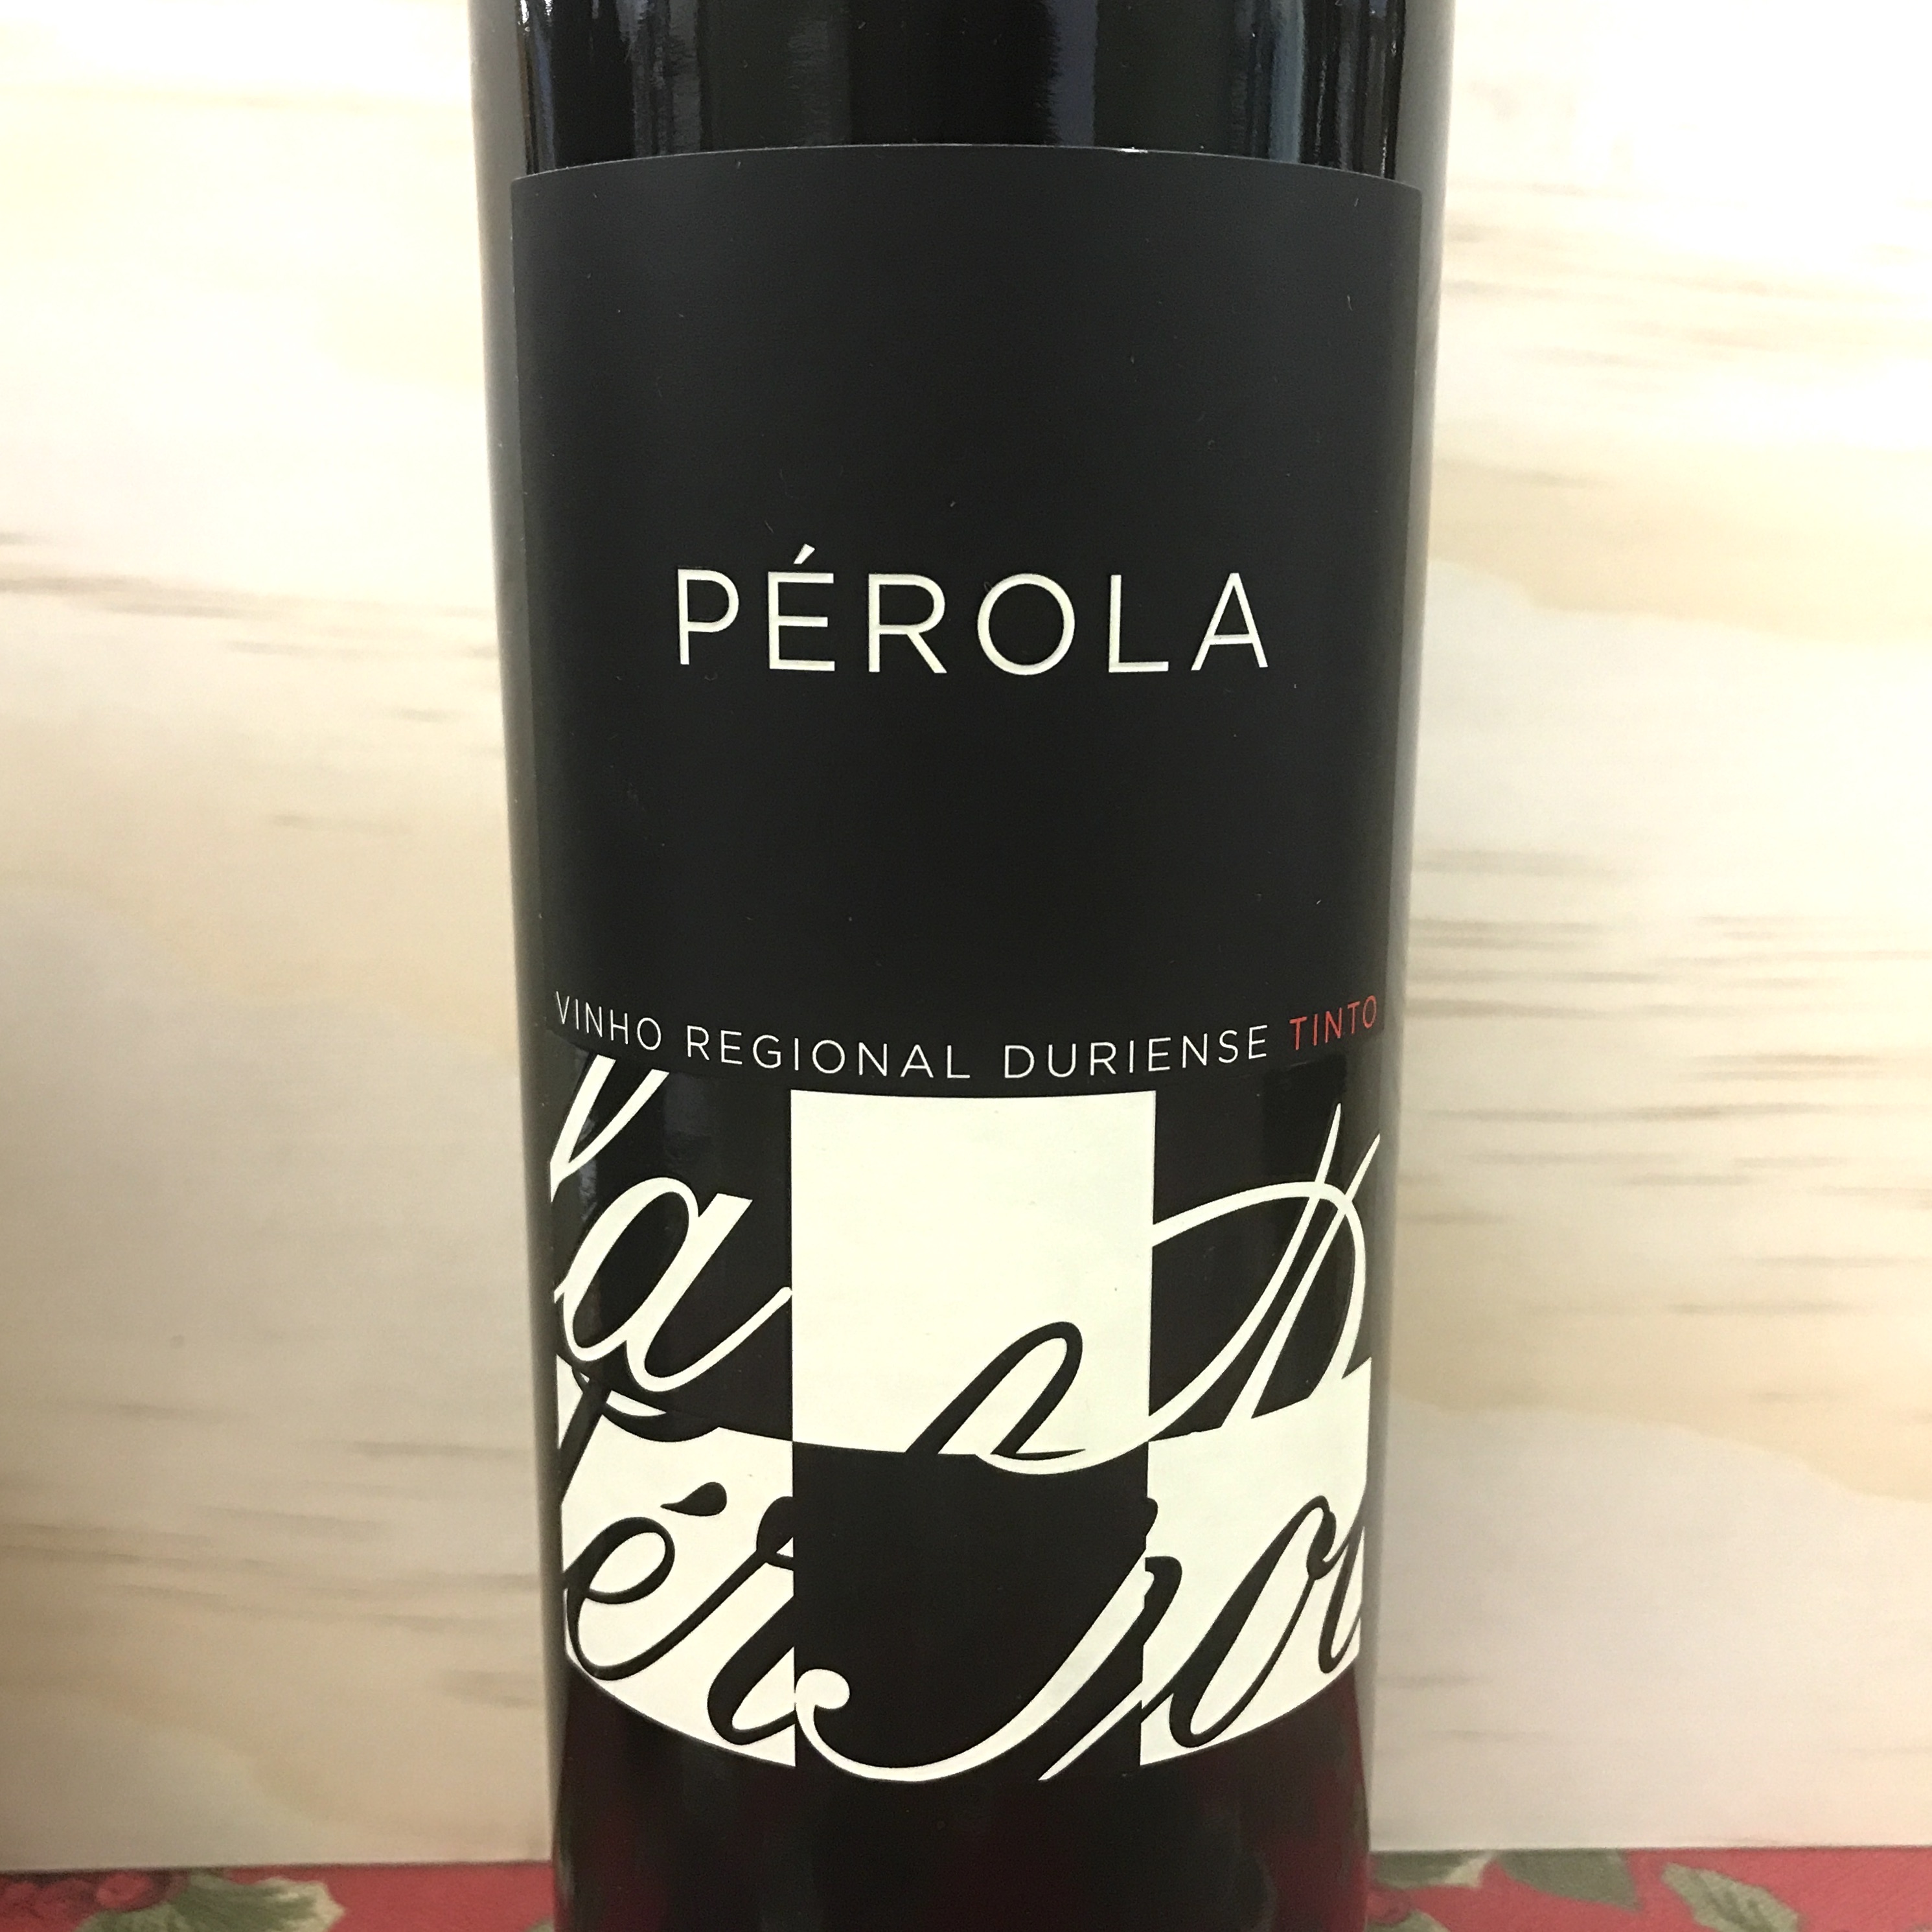 Pérola Vinho Regional Duriense Tinto 2015